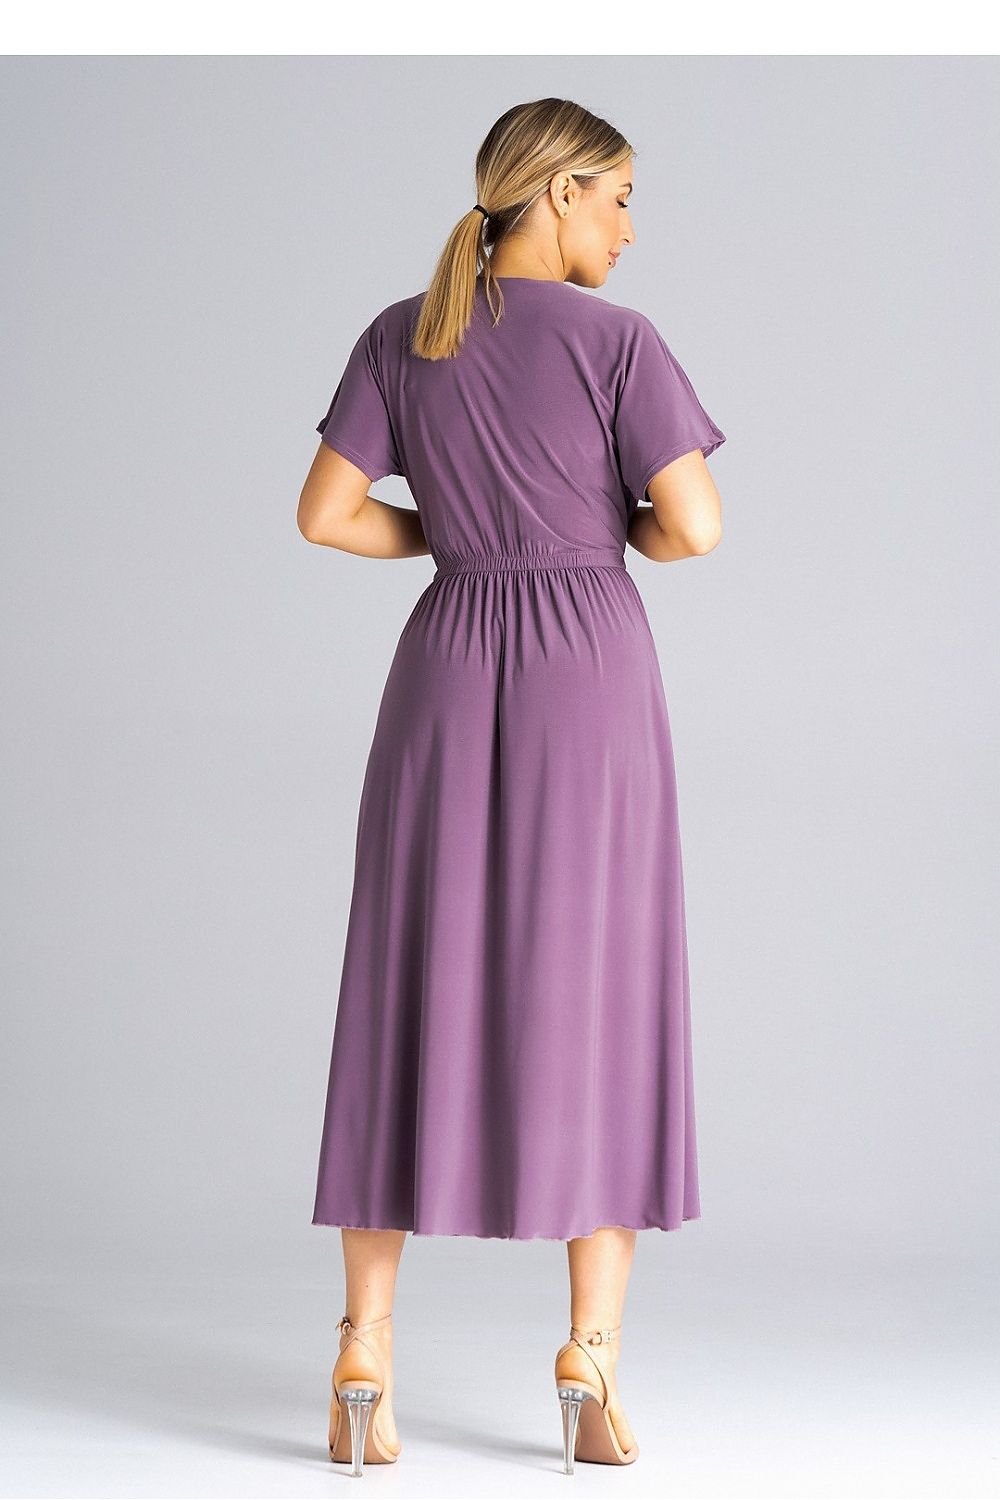 Purple Color Simple Design Short Drooping Sleeves Daydress - Venus Trendy Fashion Online